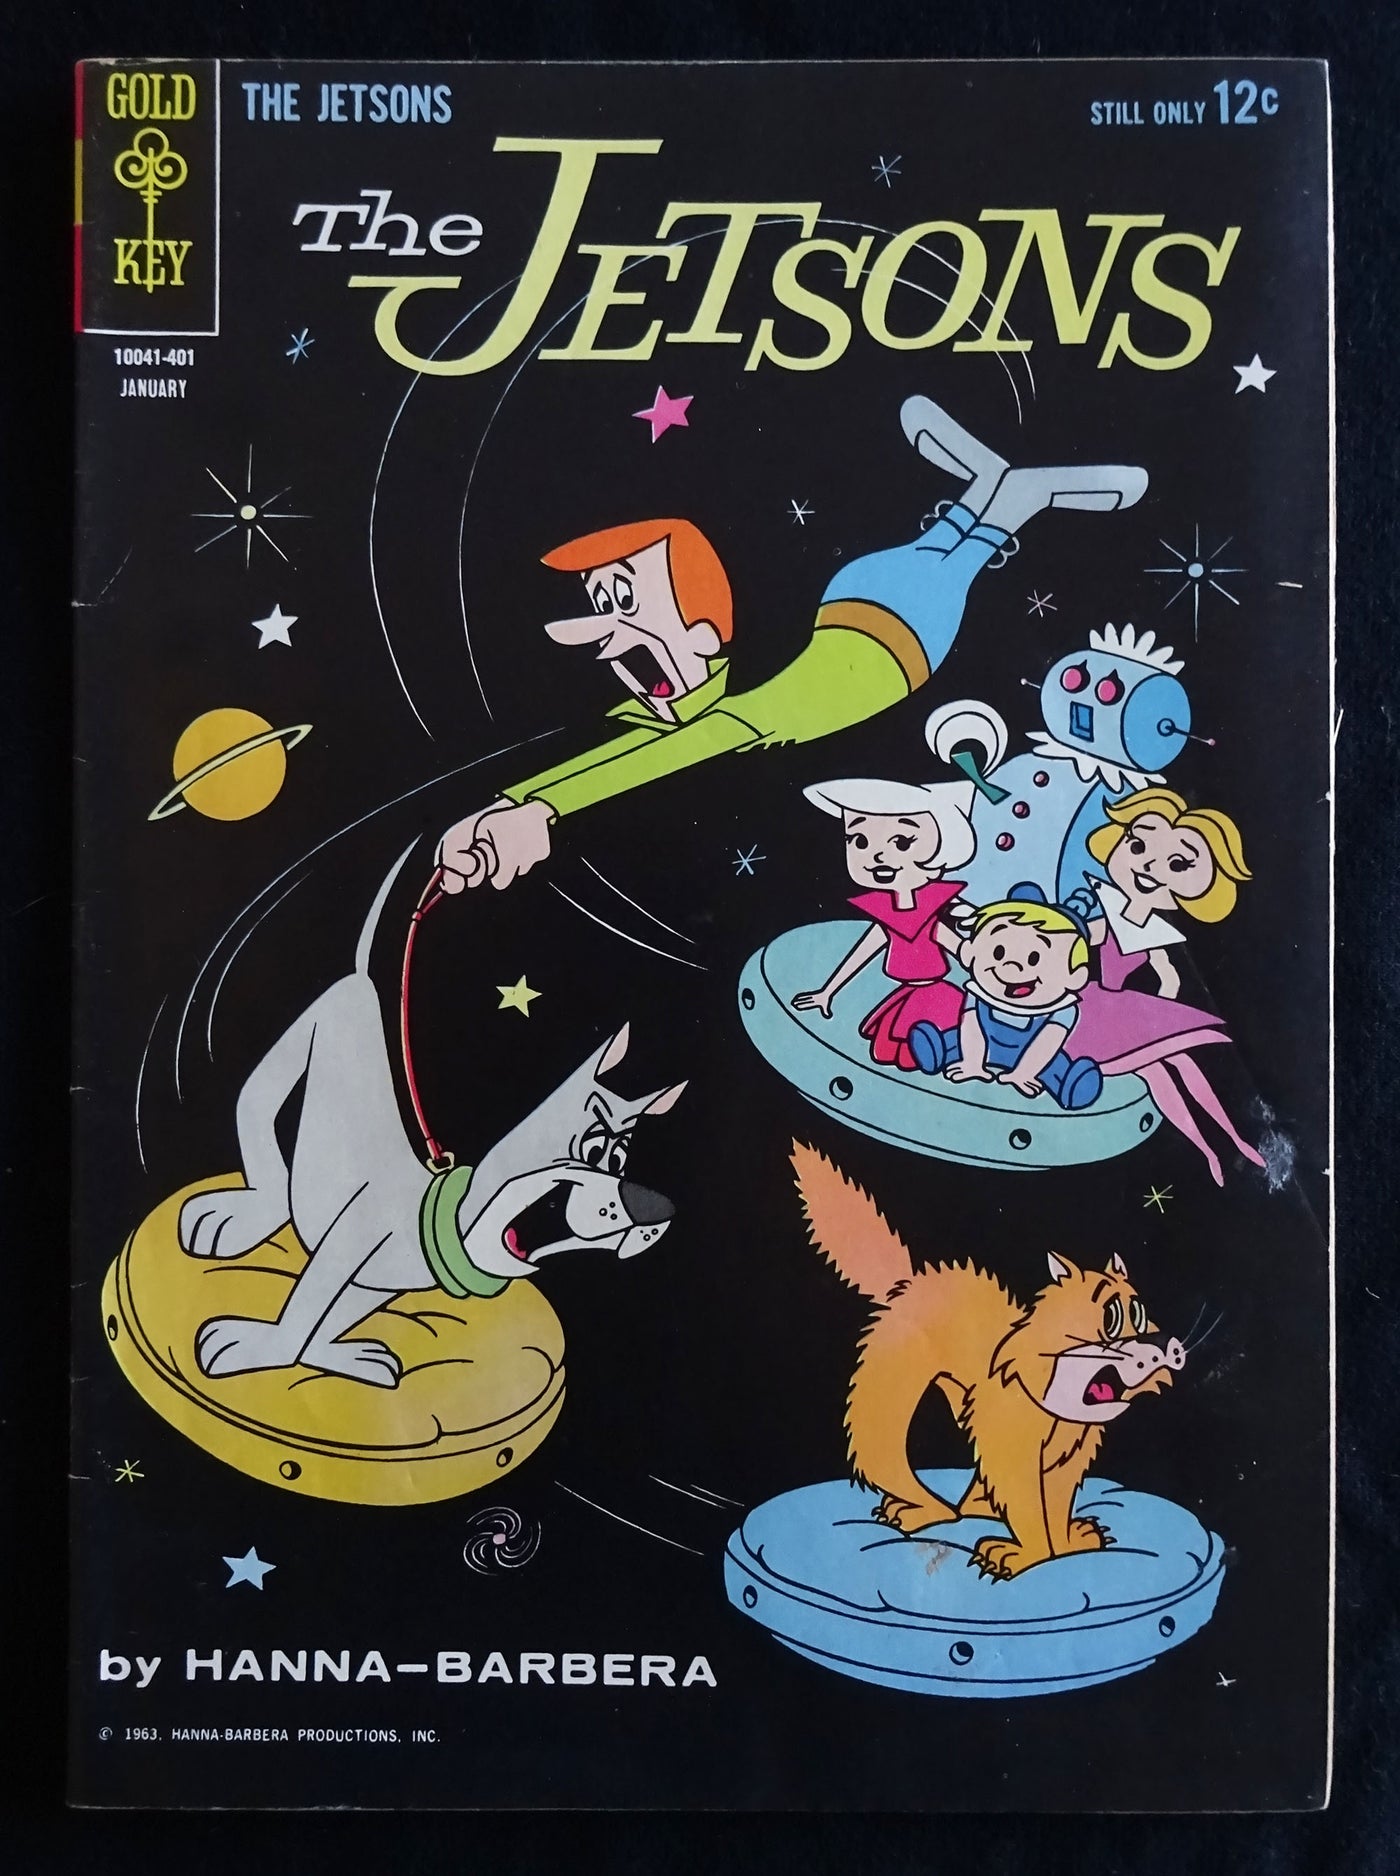 The Jetsons #7 Gold Key Comics Jan 1964